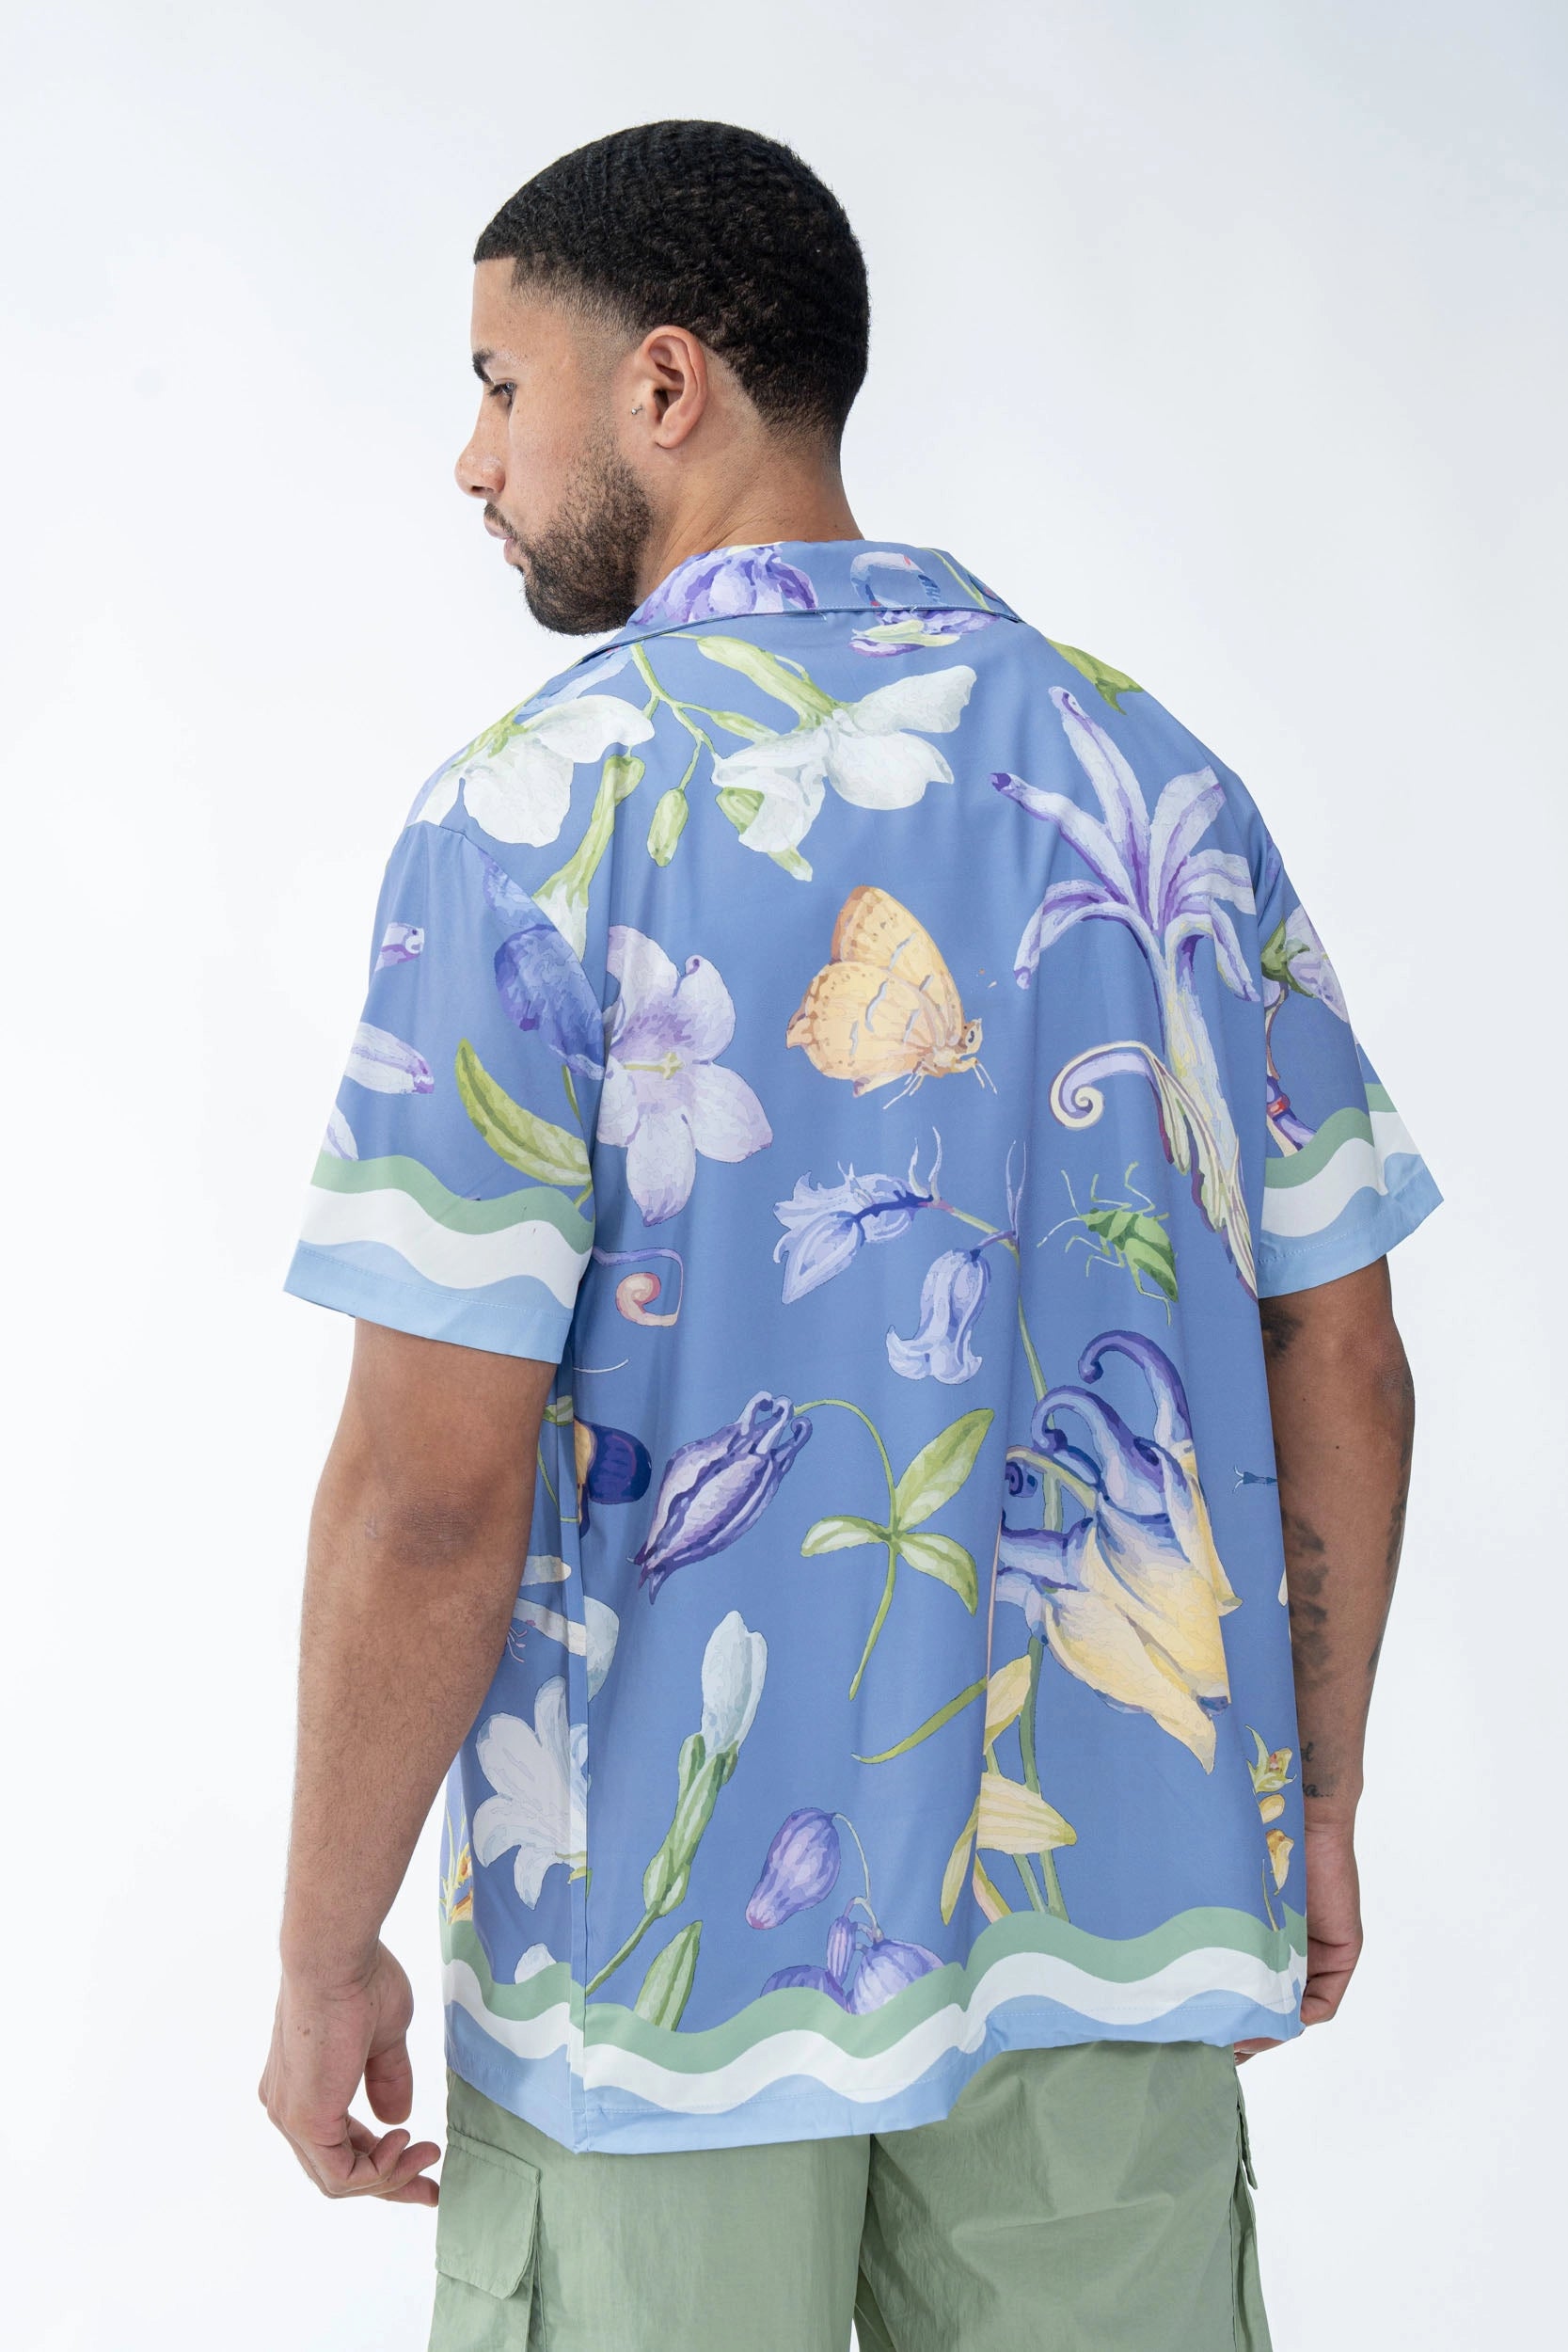 Chic shirt with botanical patterns